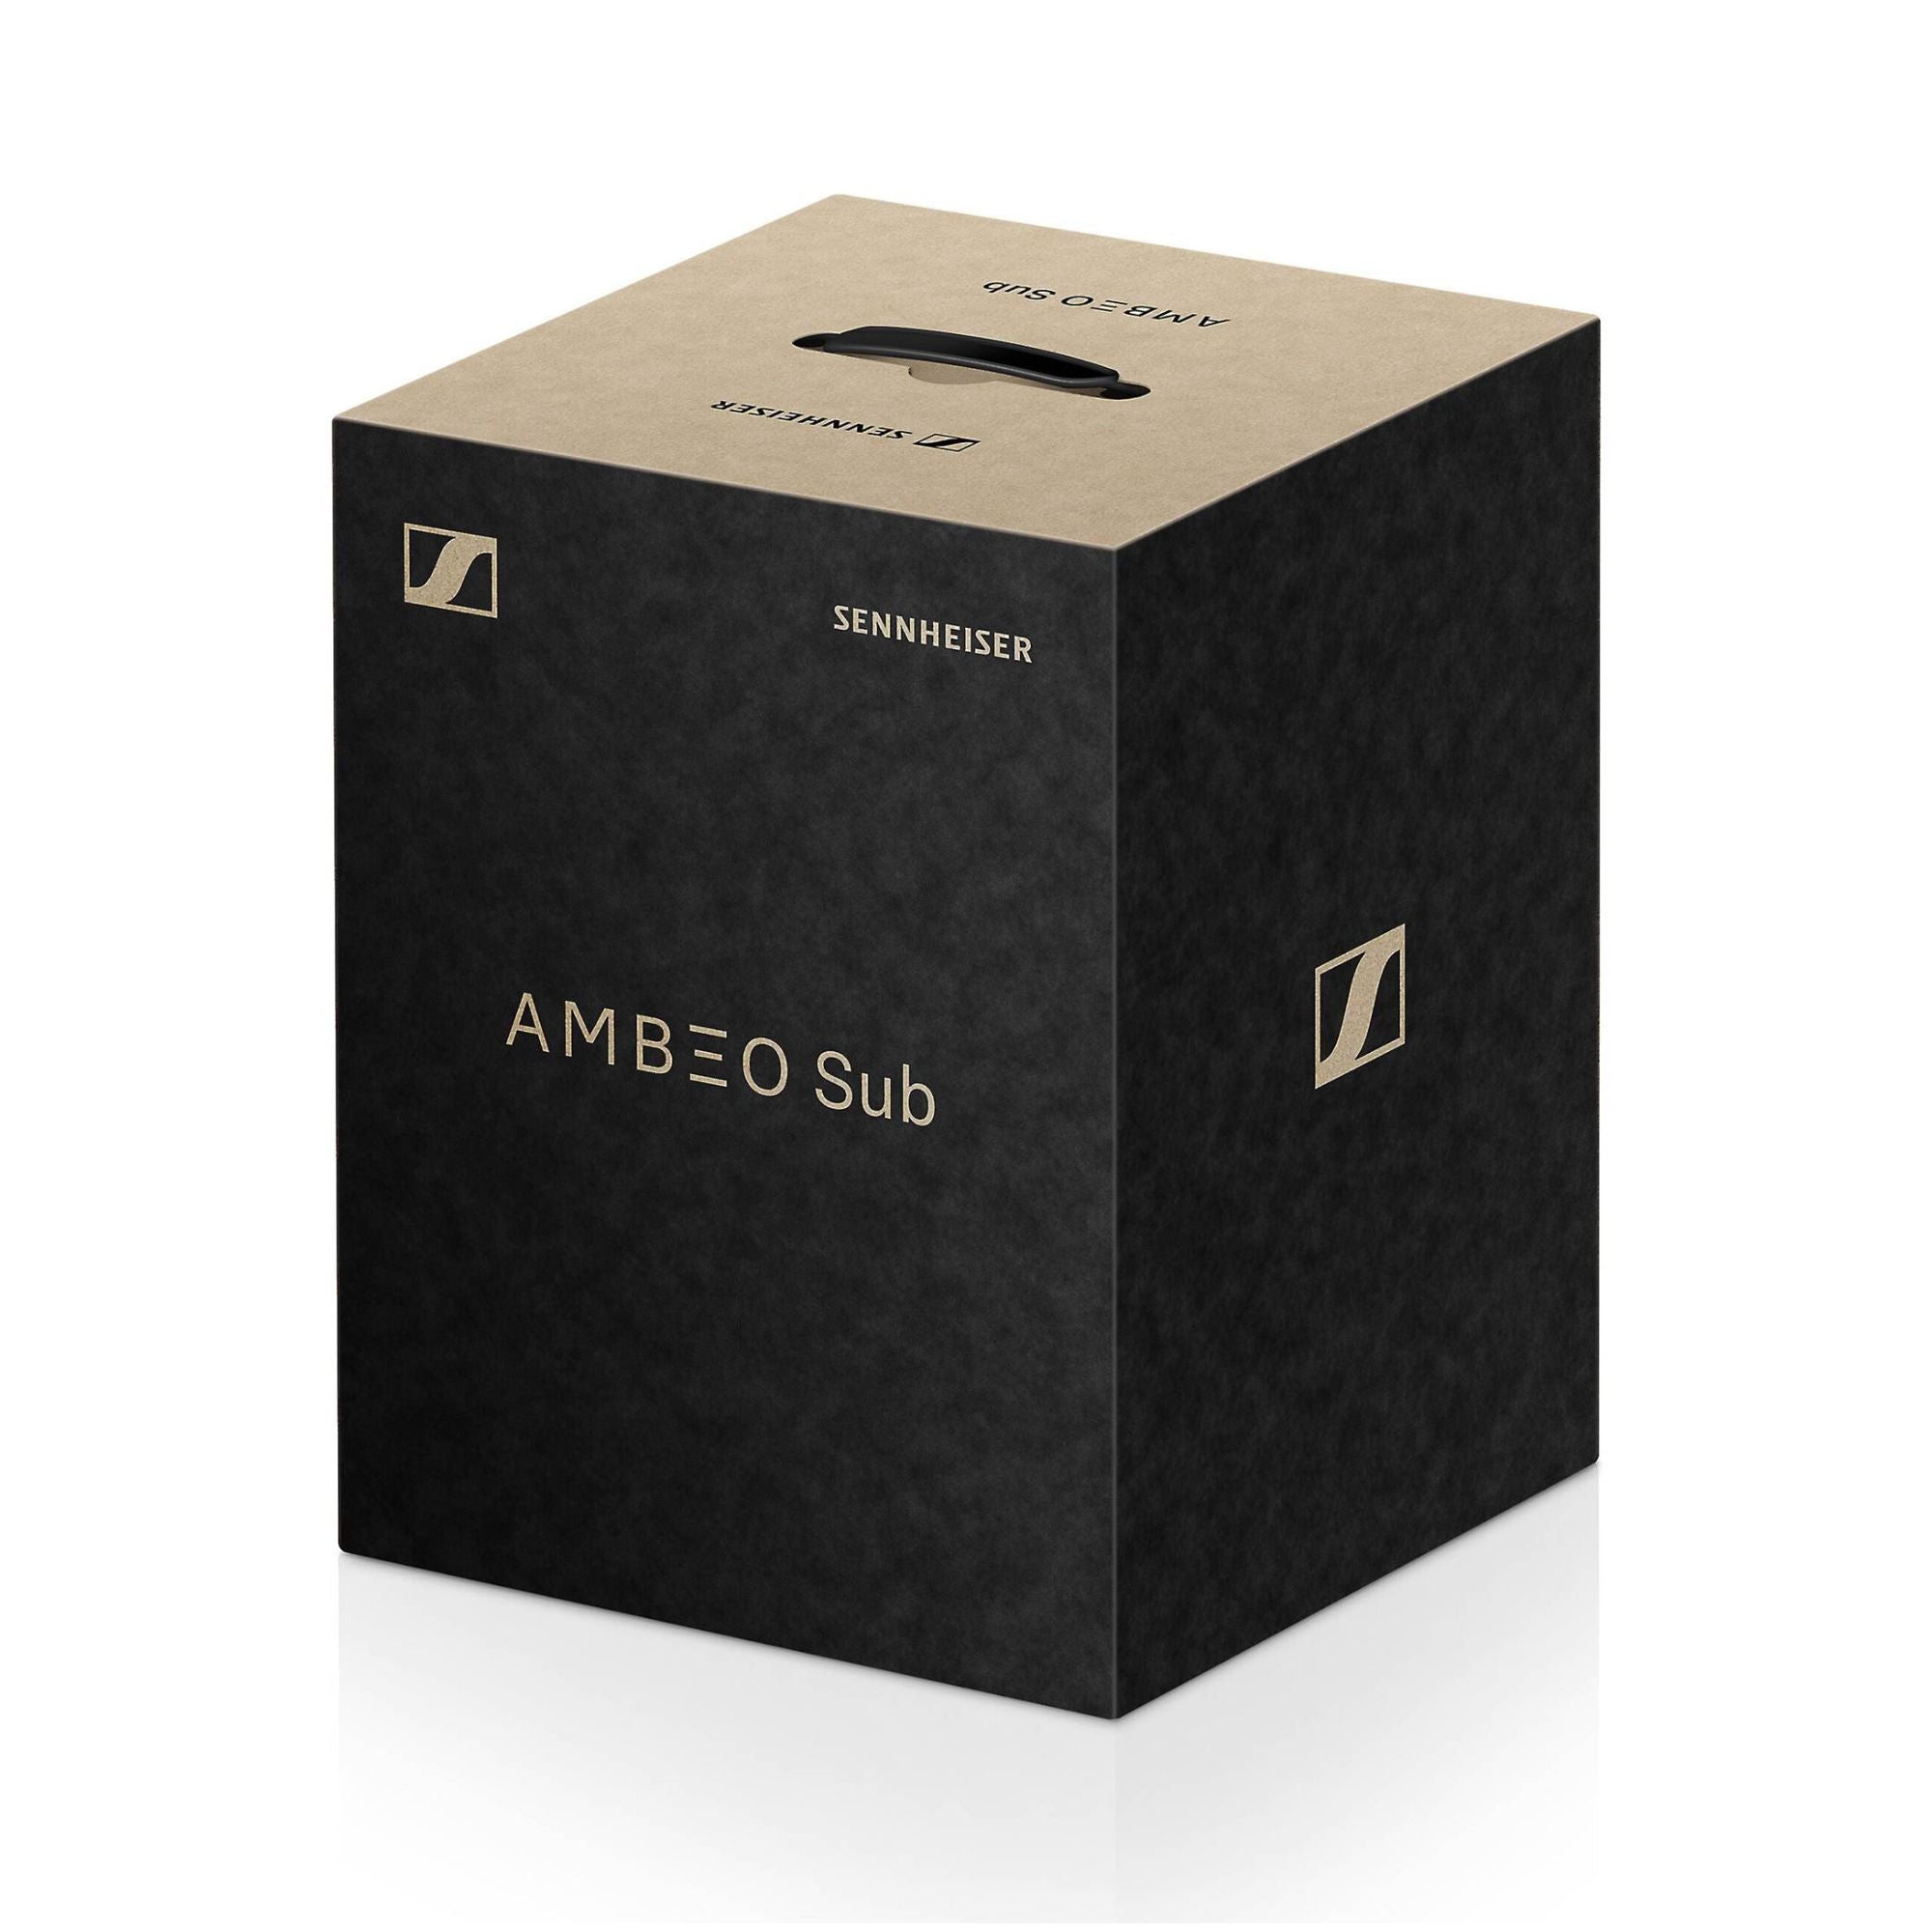 Sennheiser AMBEO Sub 8" 350W Wireless Subwoofer for AMBEO Soundbars, Sennheiser, Subwoofer - AVStore.in